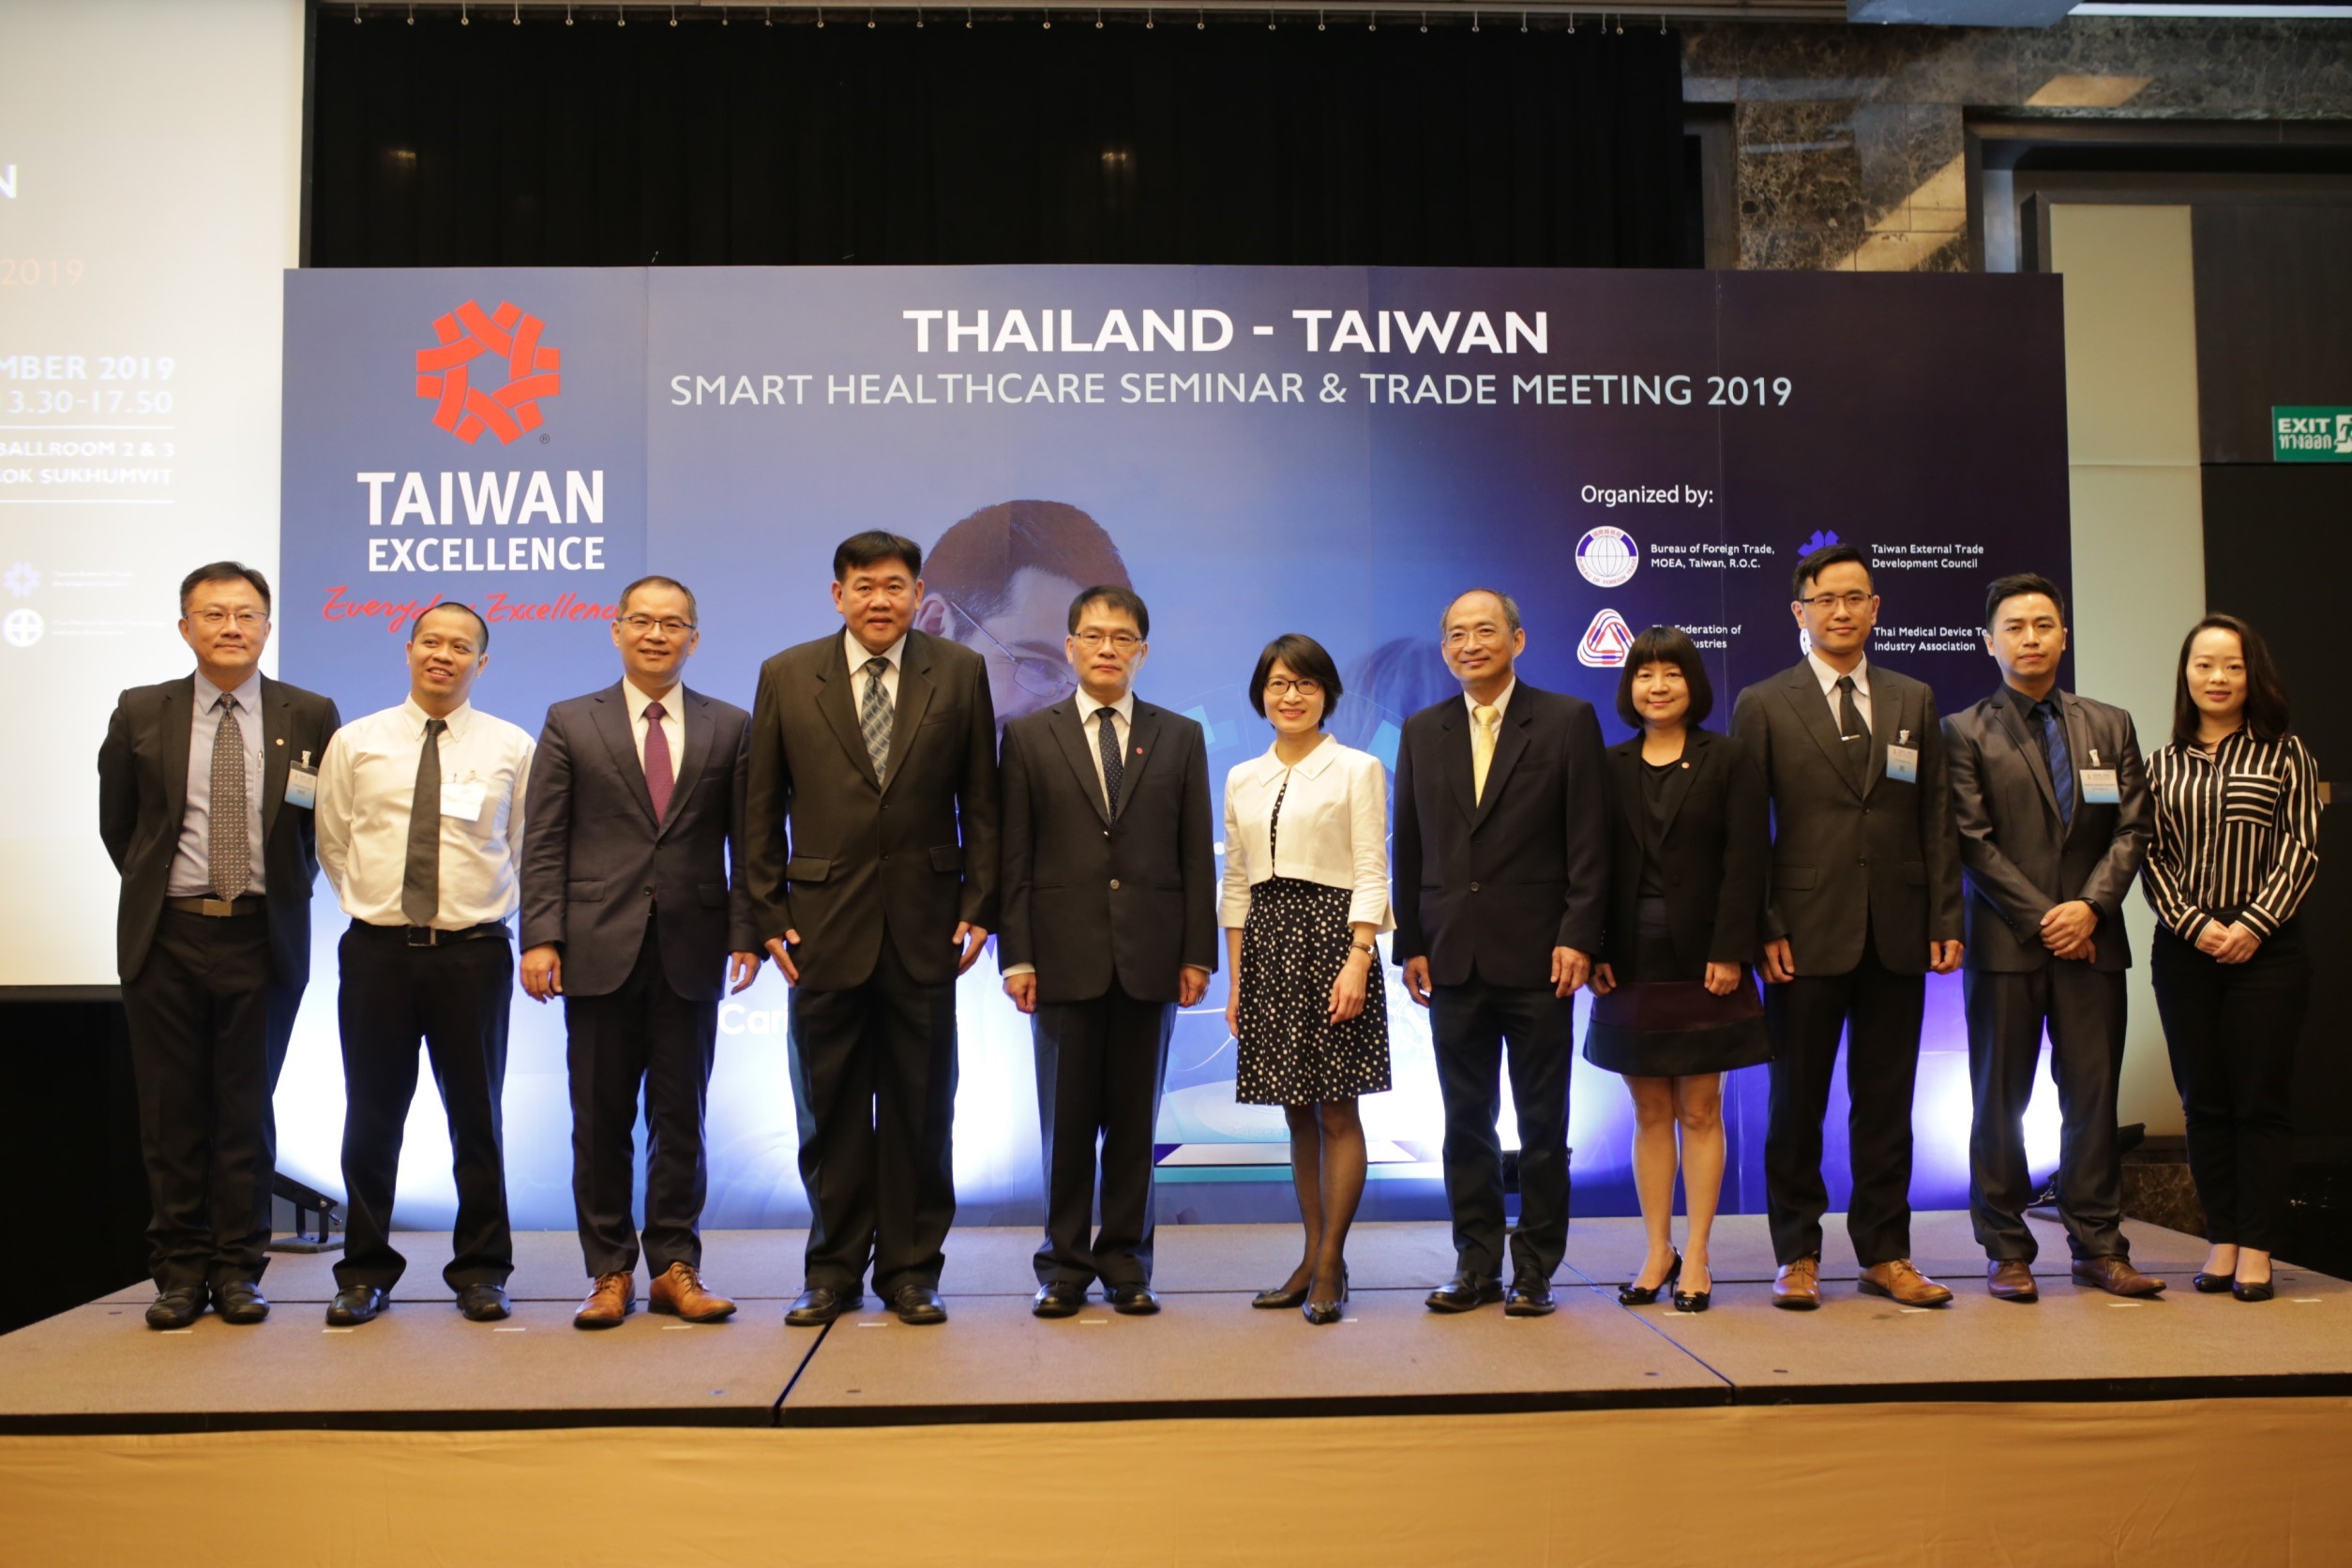 group2 | ไทย และไต้หวัน จับมือจัดสัมมนา “Thailand-Taiwan Smart Healthcare Seminar & Trade Meeting 2019” เพื่อร่วมสร้างประเทศไทยสู่การเป็นศูนย์กลางทางการแพทย์แห่งเอเชีย